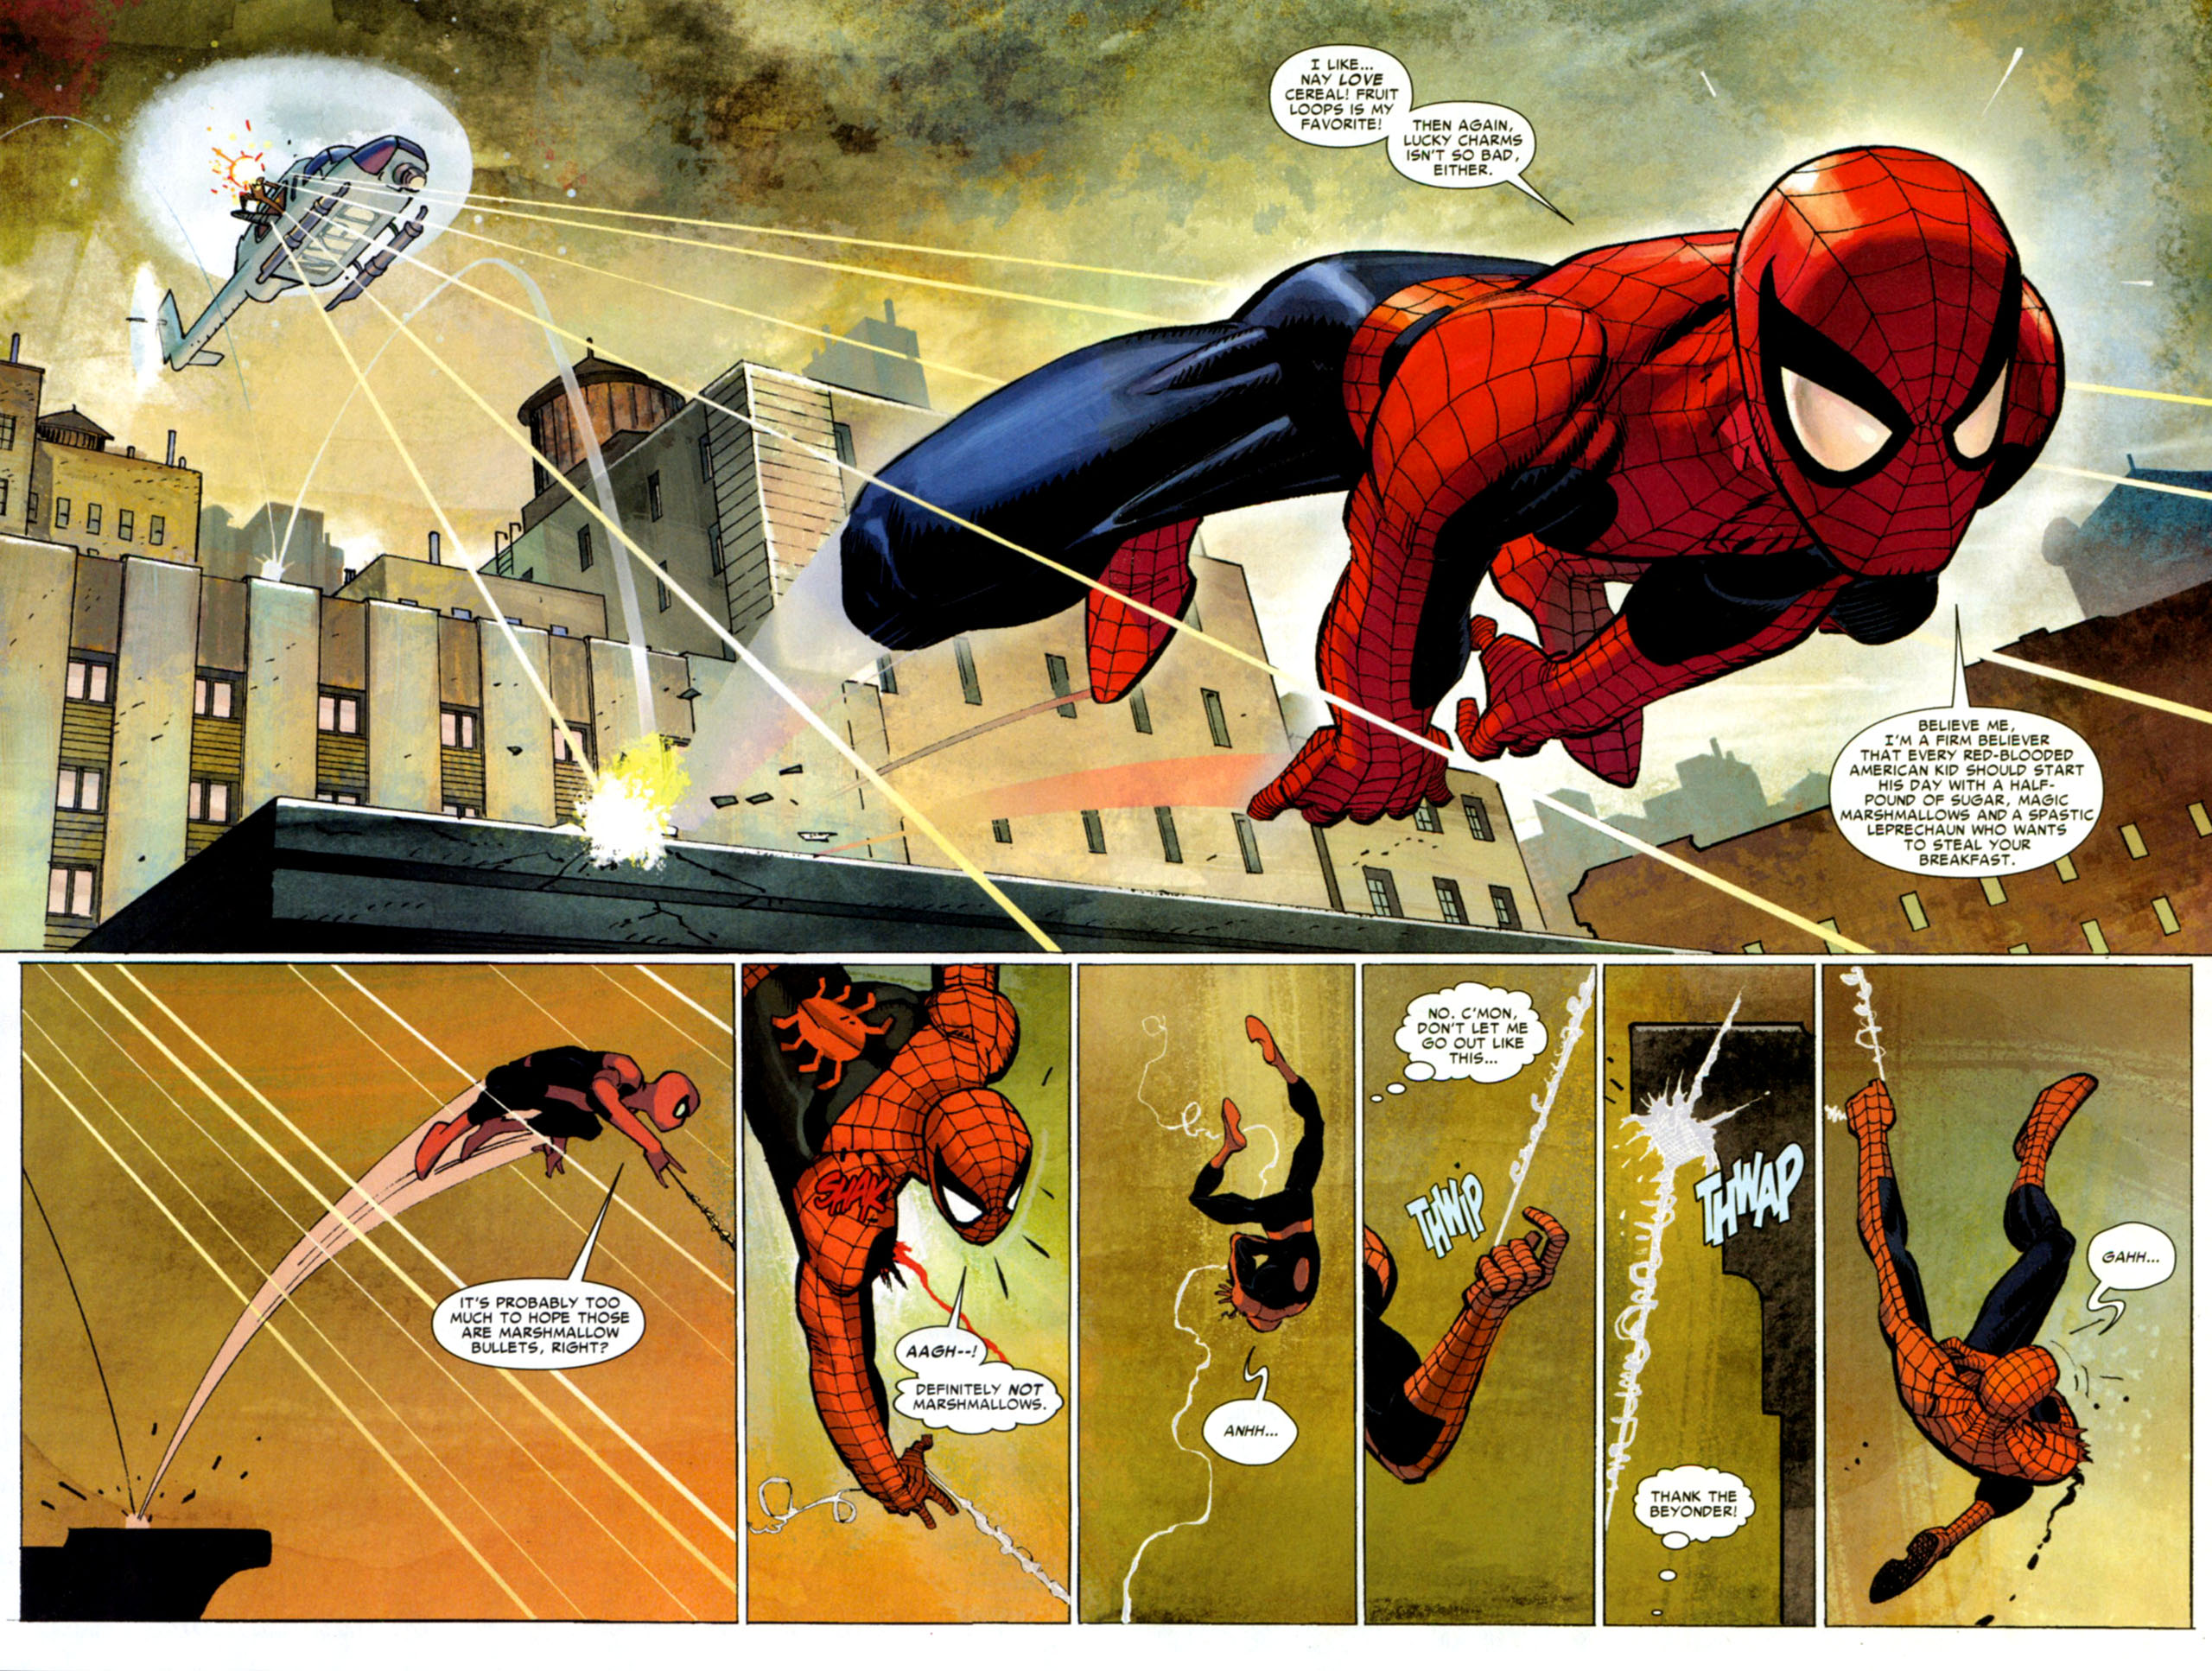 Spider-Man - desktop wallpaper